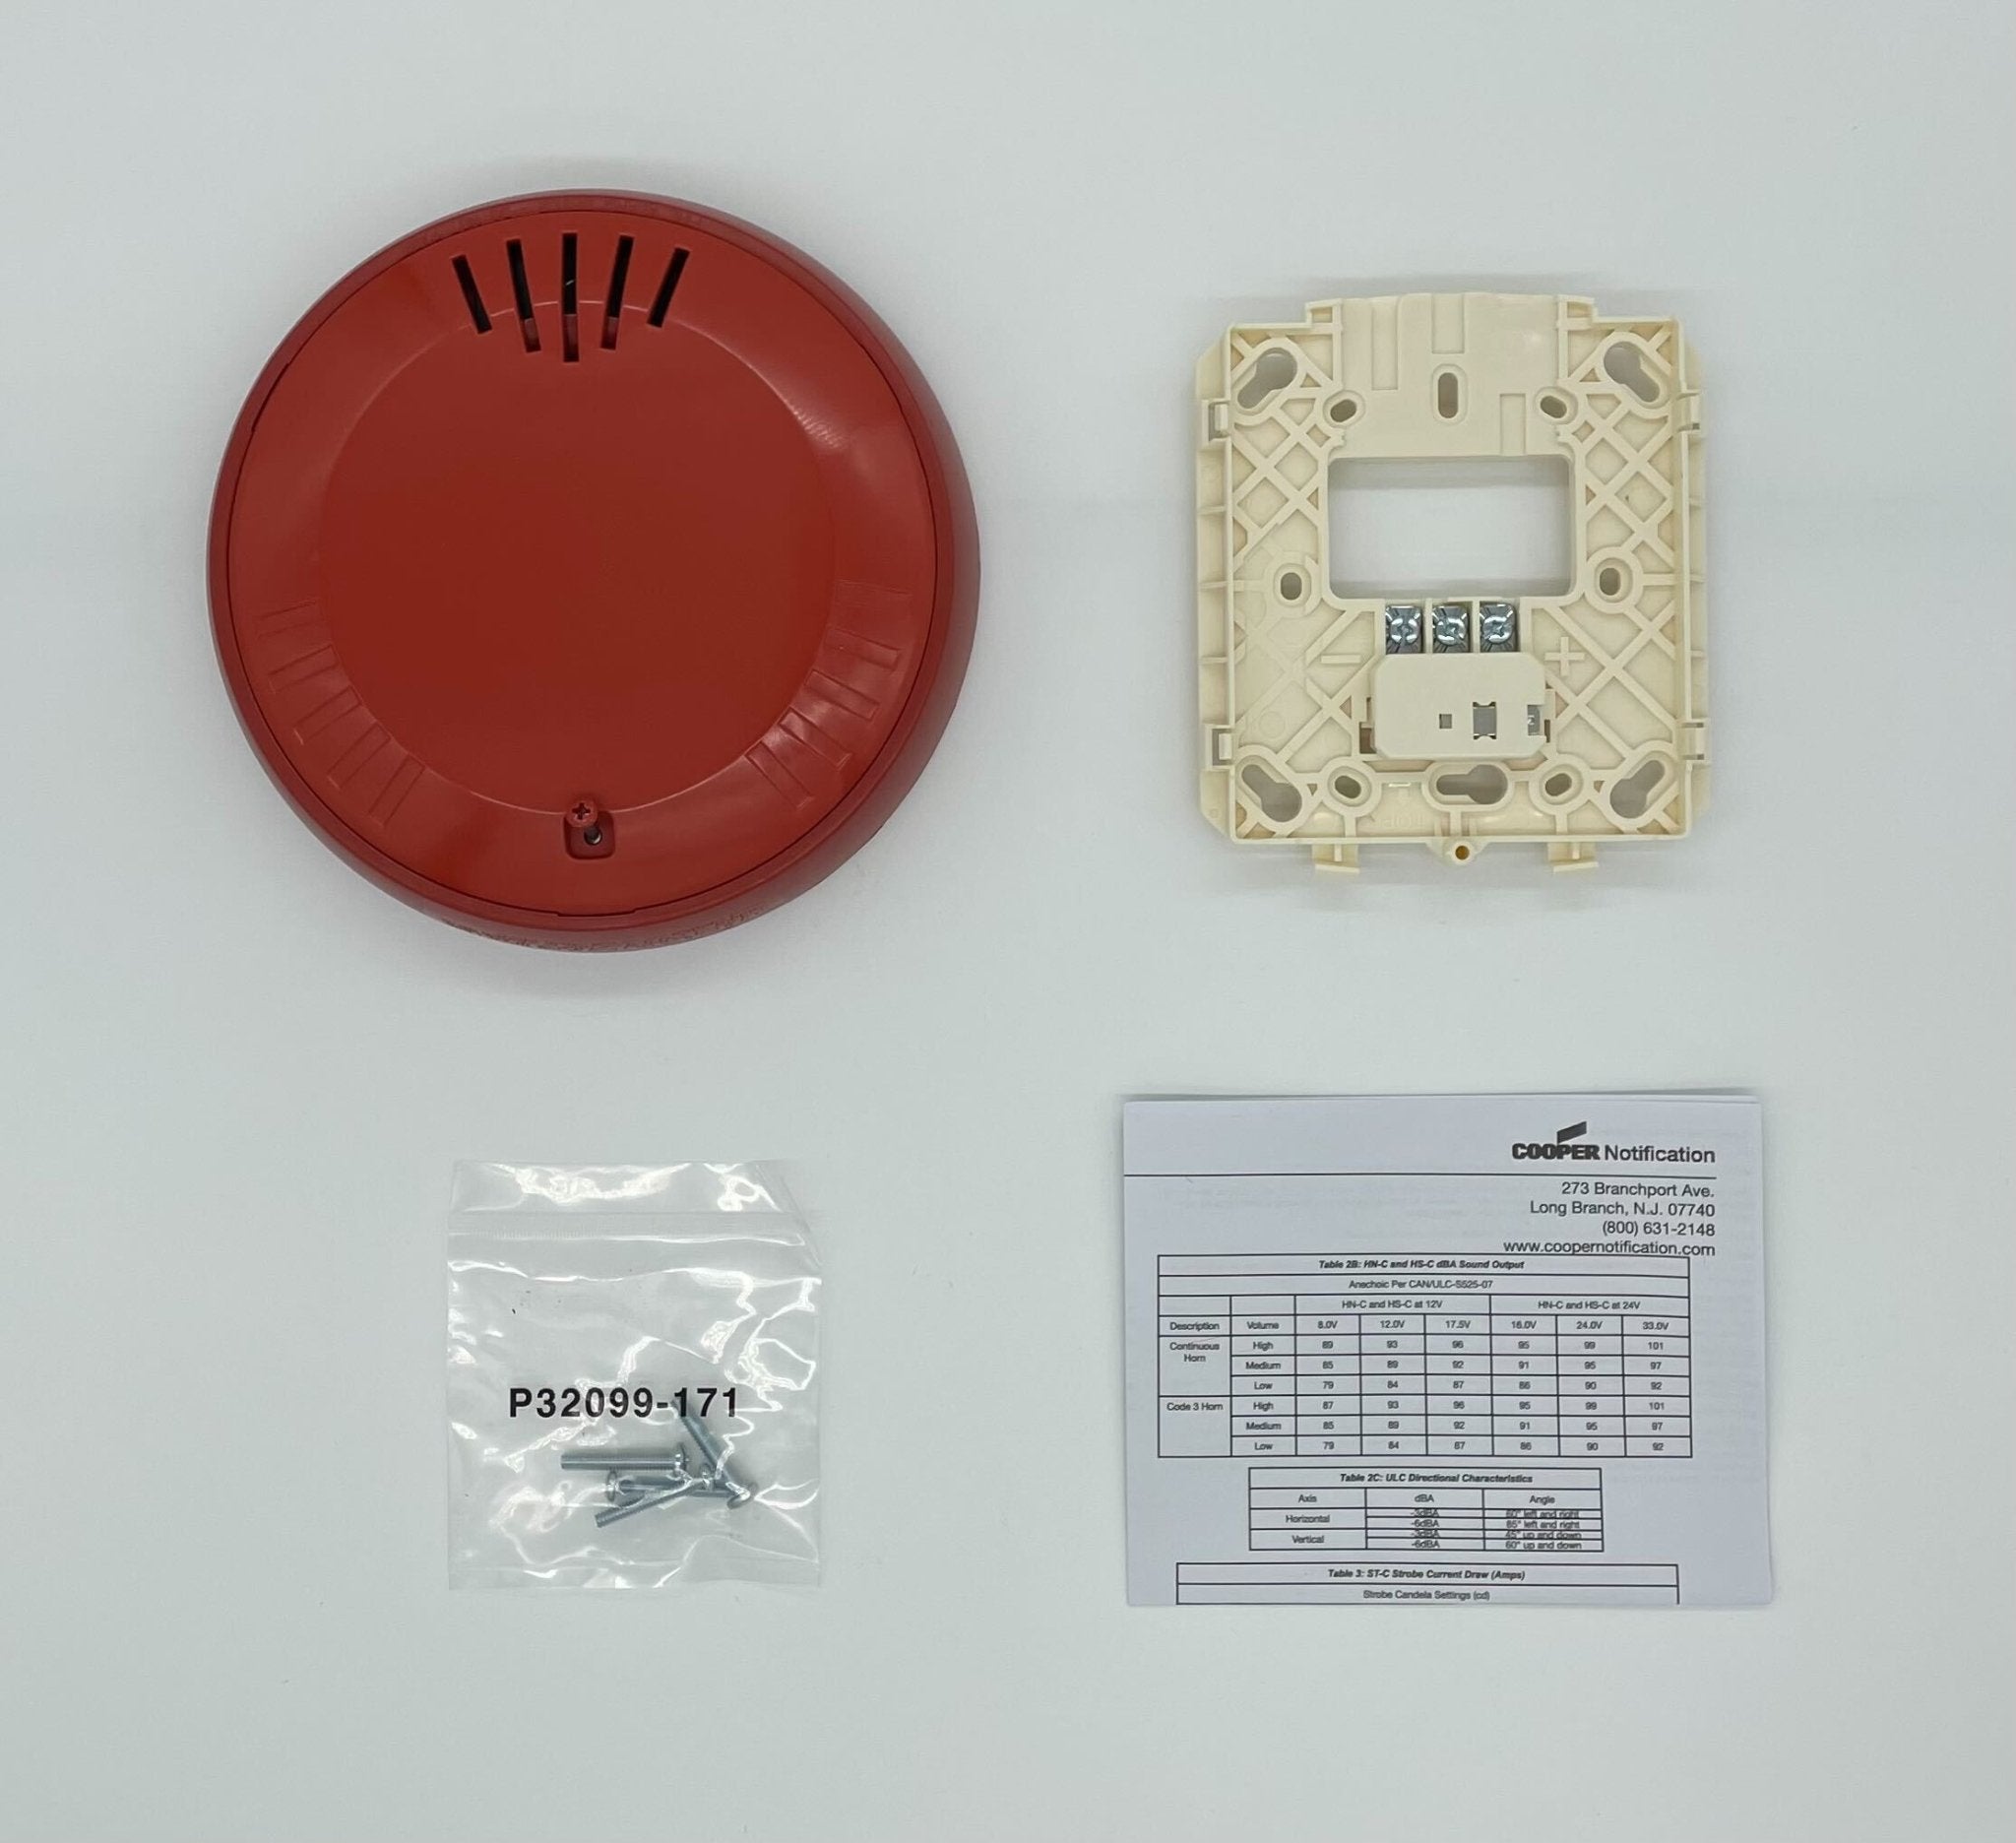 Wheelock HNRC - The Fire Alarm Supplier